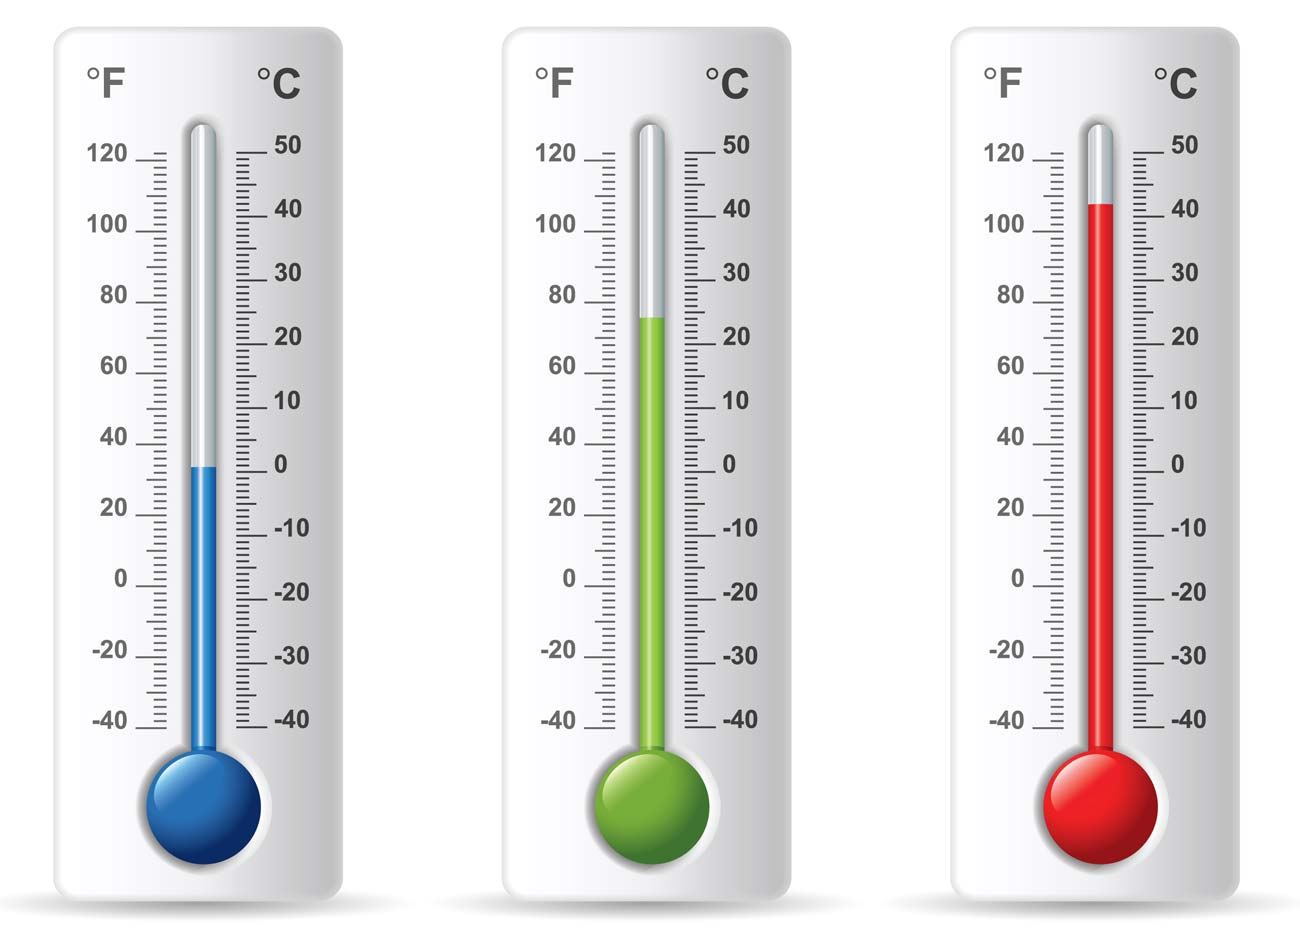 How do you convert 46 degrees Fahrenheit to Celsius?